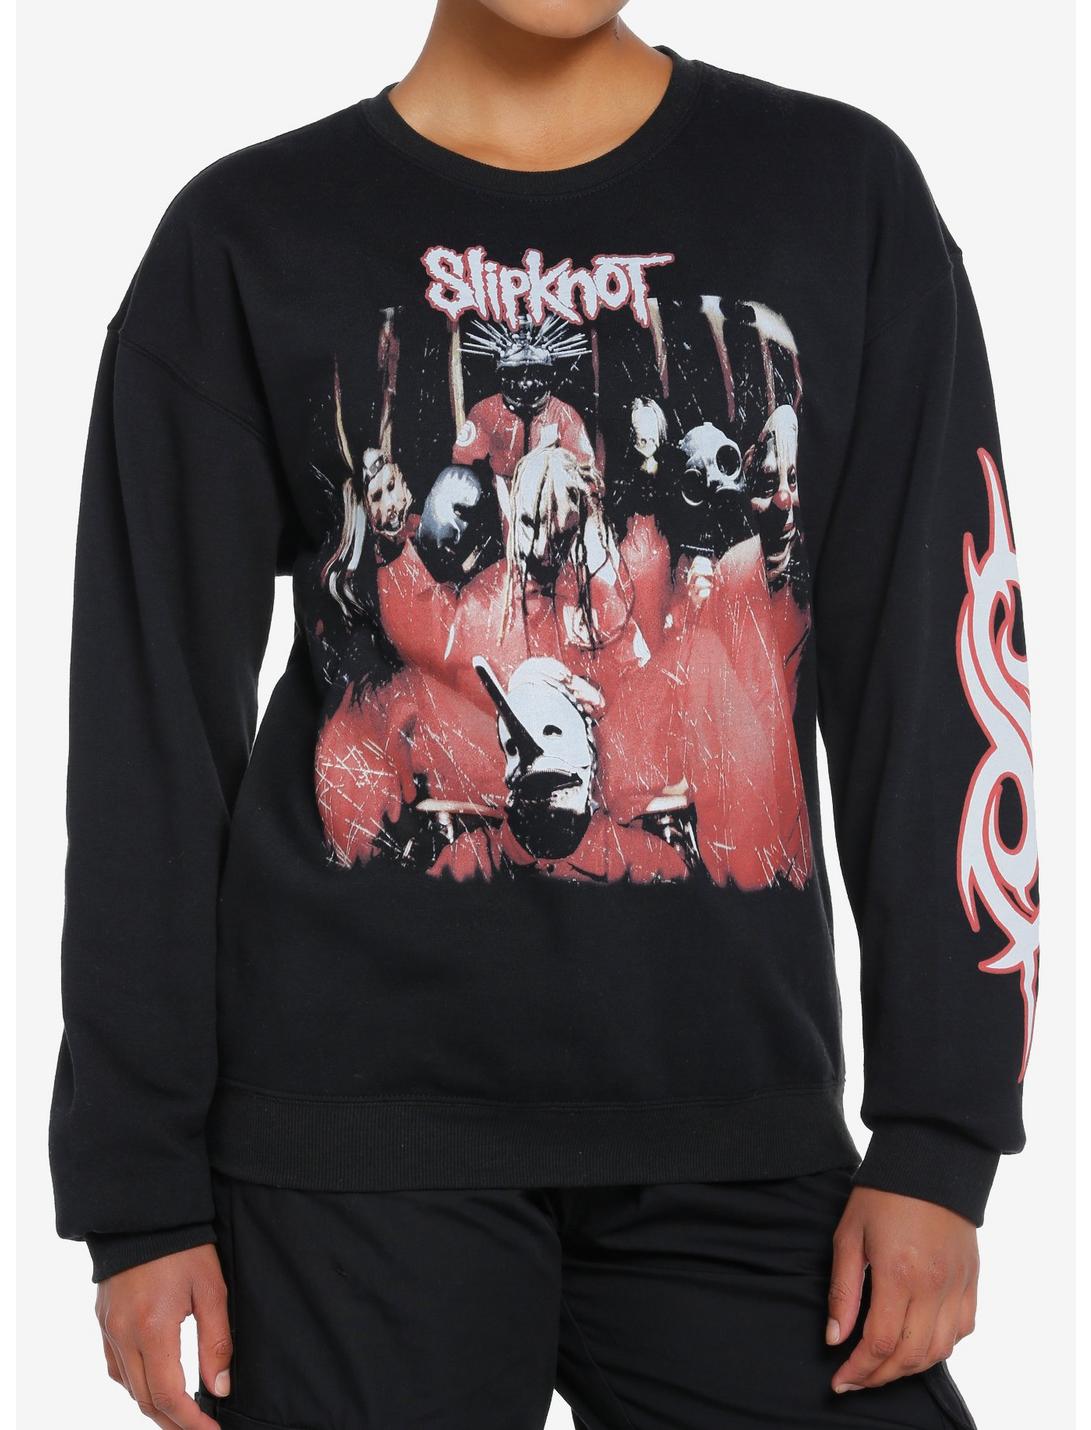 Slipknot Debut Album Cover Art Girls Sweatshirt Product Image